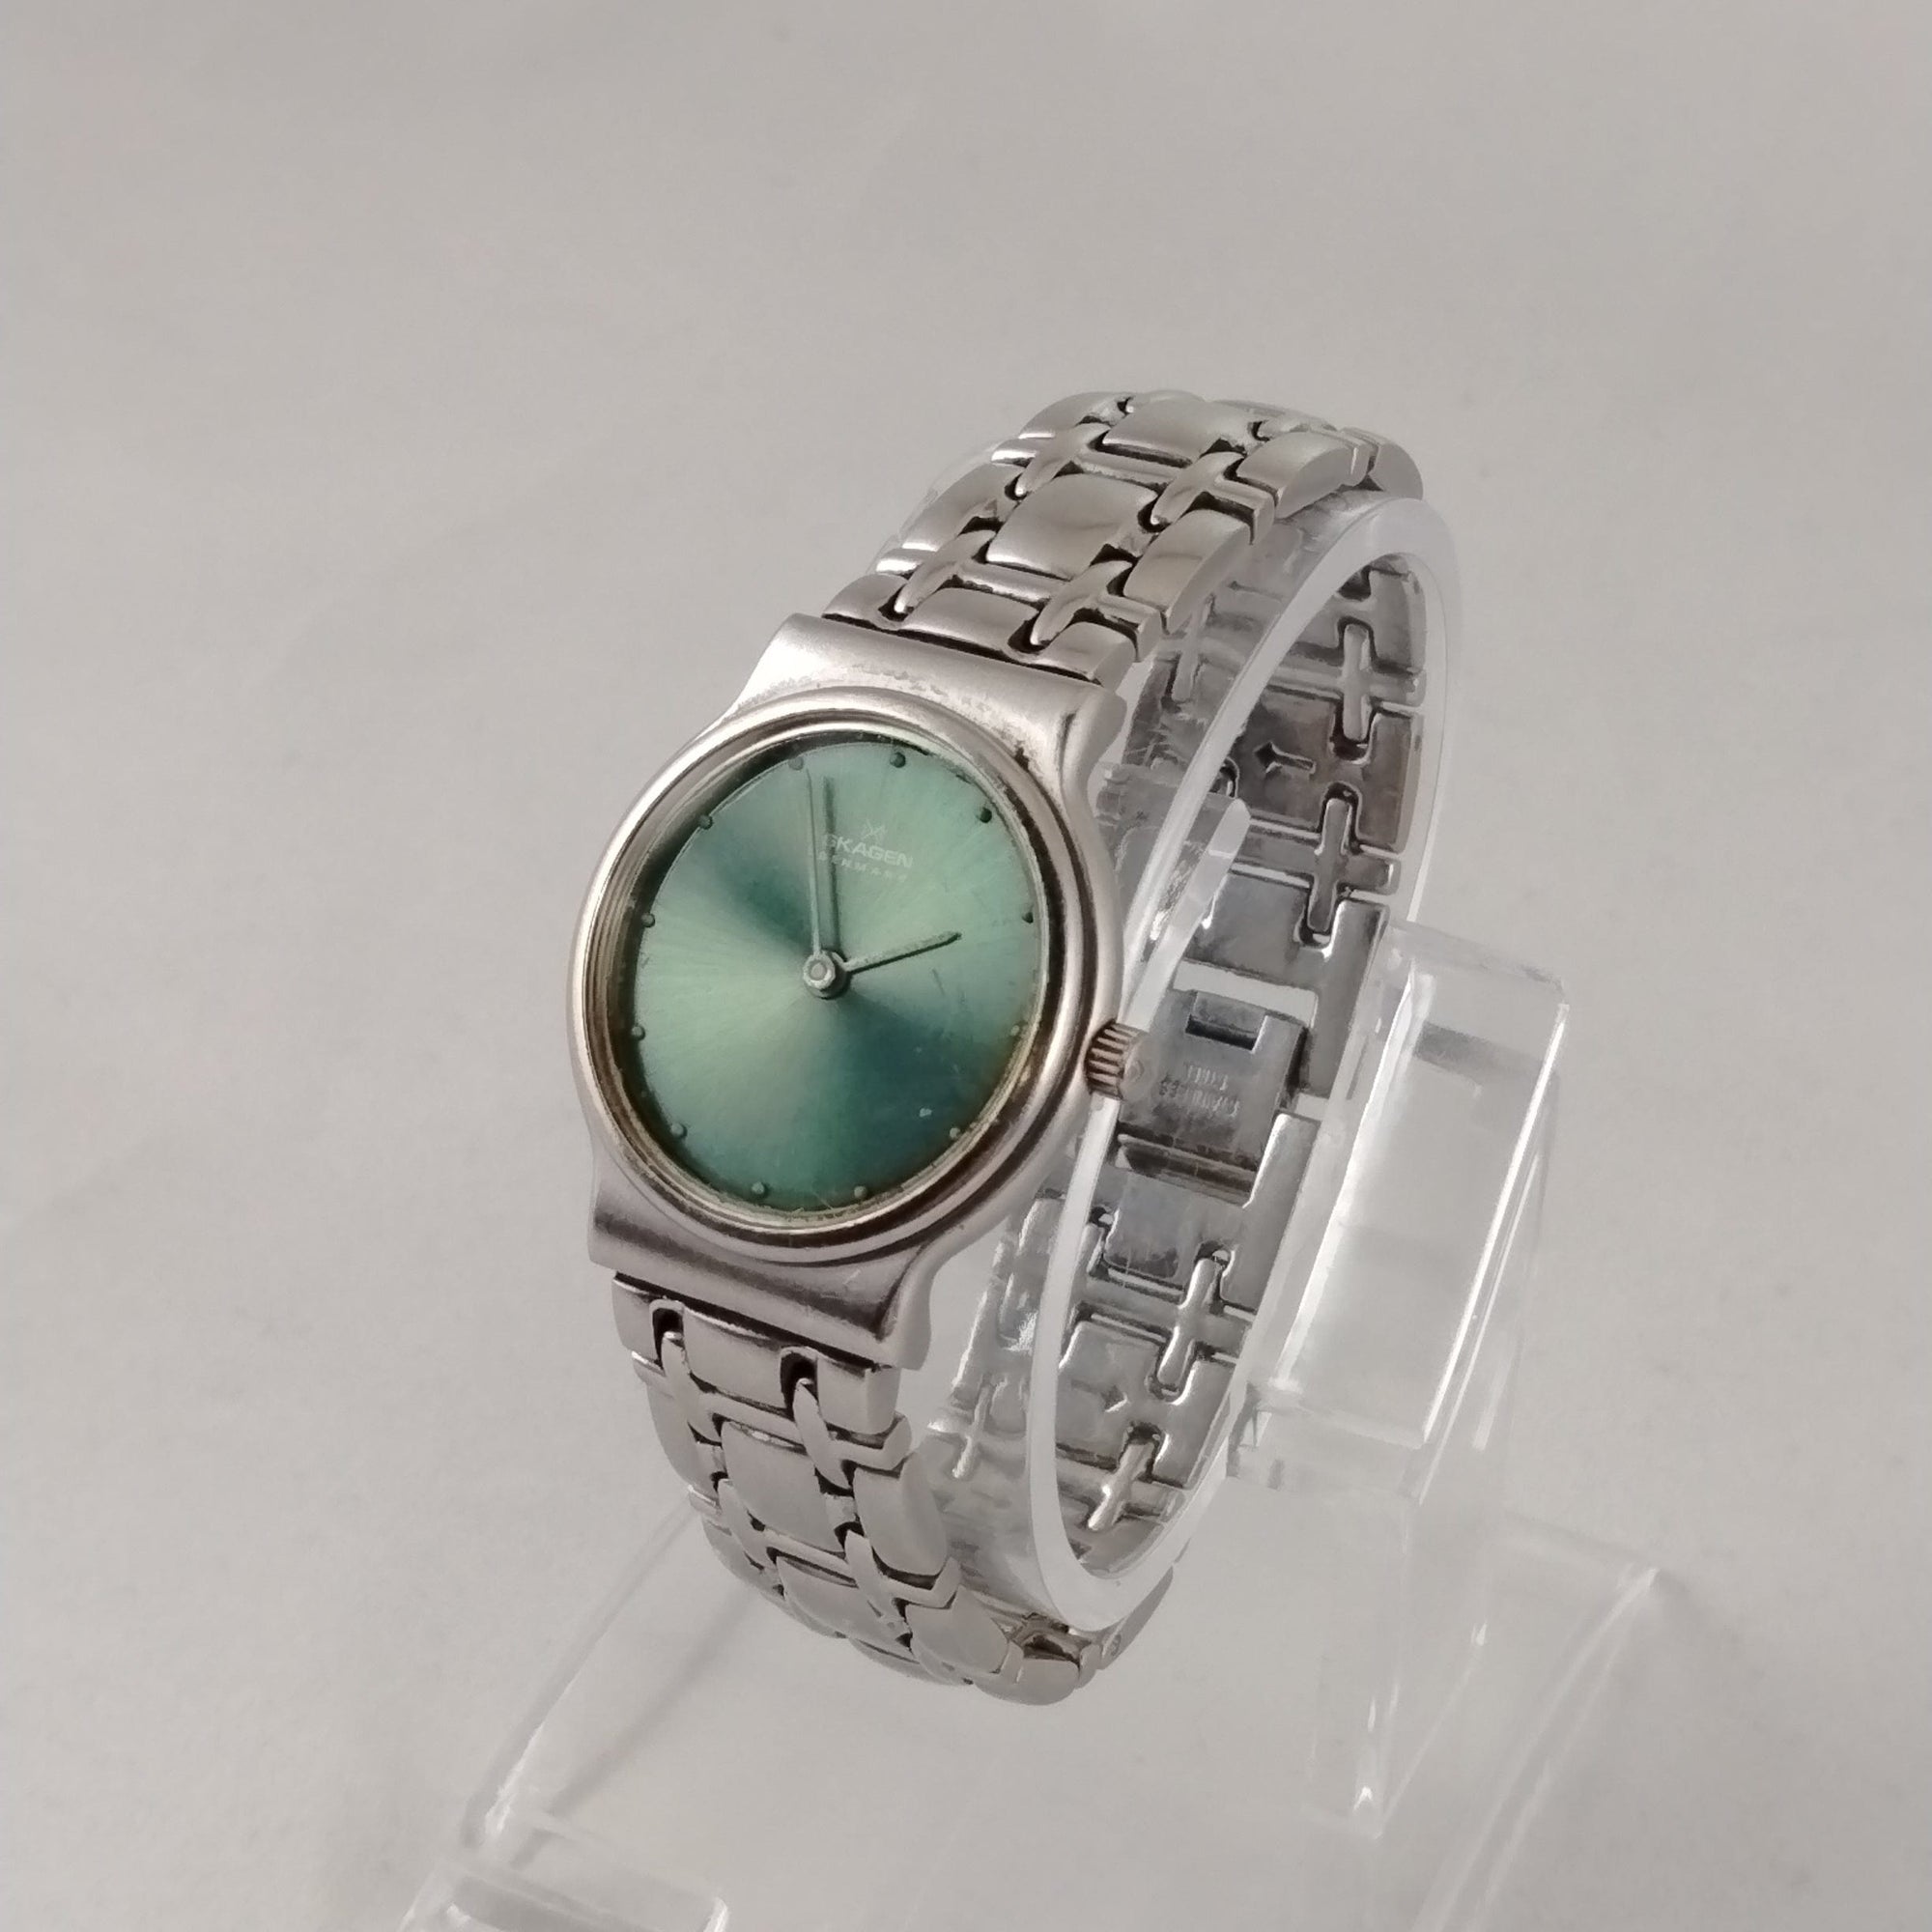 I Like Mikes Mid Century Modern Watches Skagen Women's Silver Tone Round Watch, Sage Green Dial, Link Bracelet